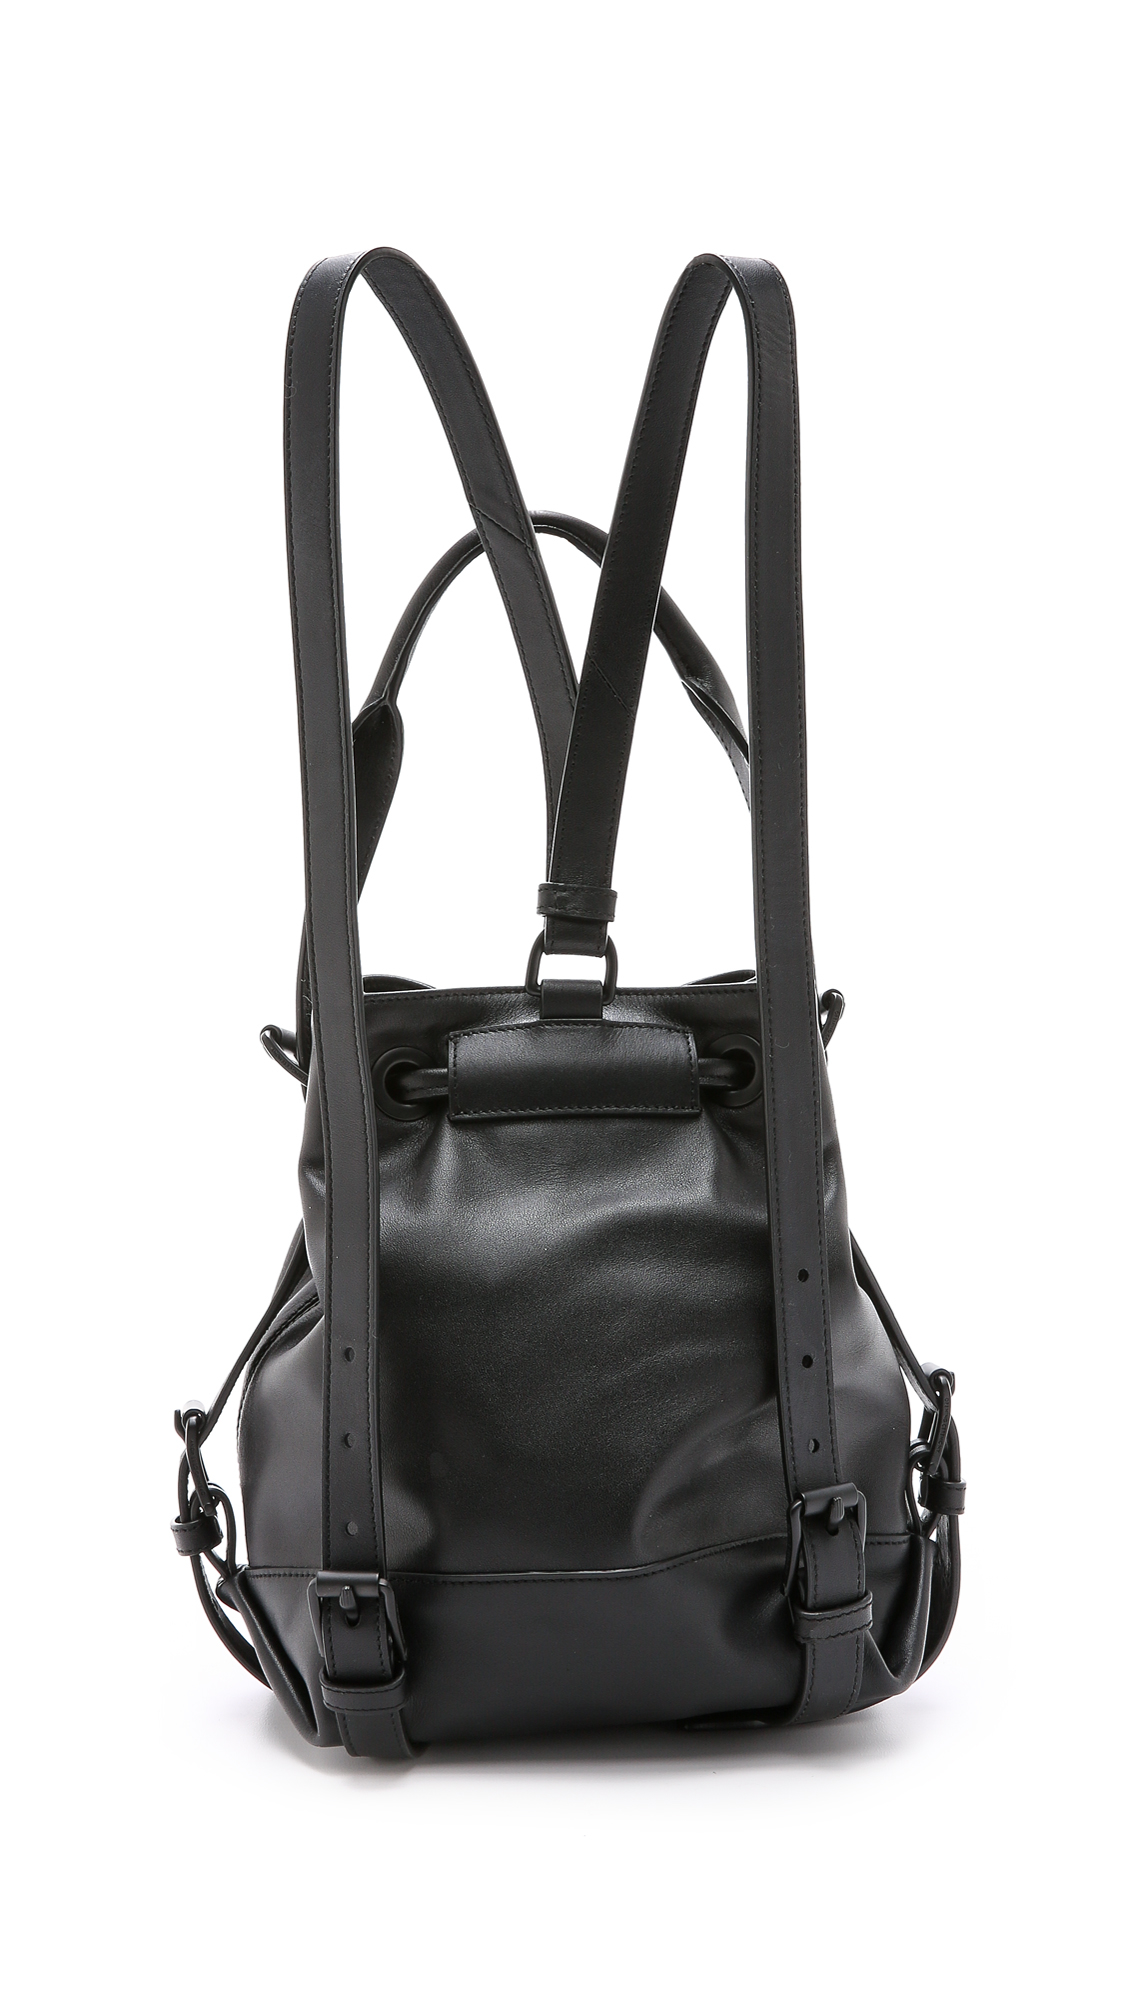 Lyst - Adidas Originals Mini Izzy Backpack in Black